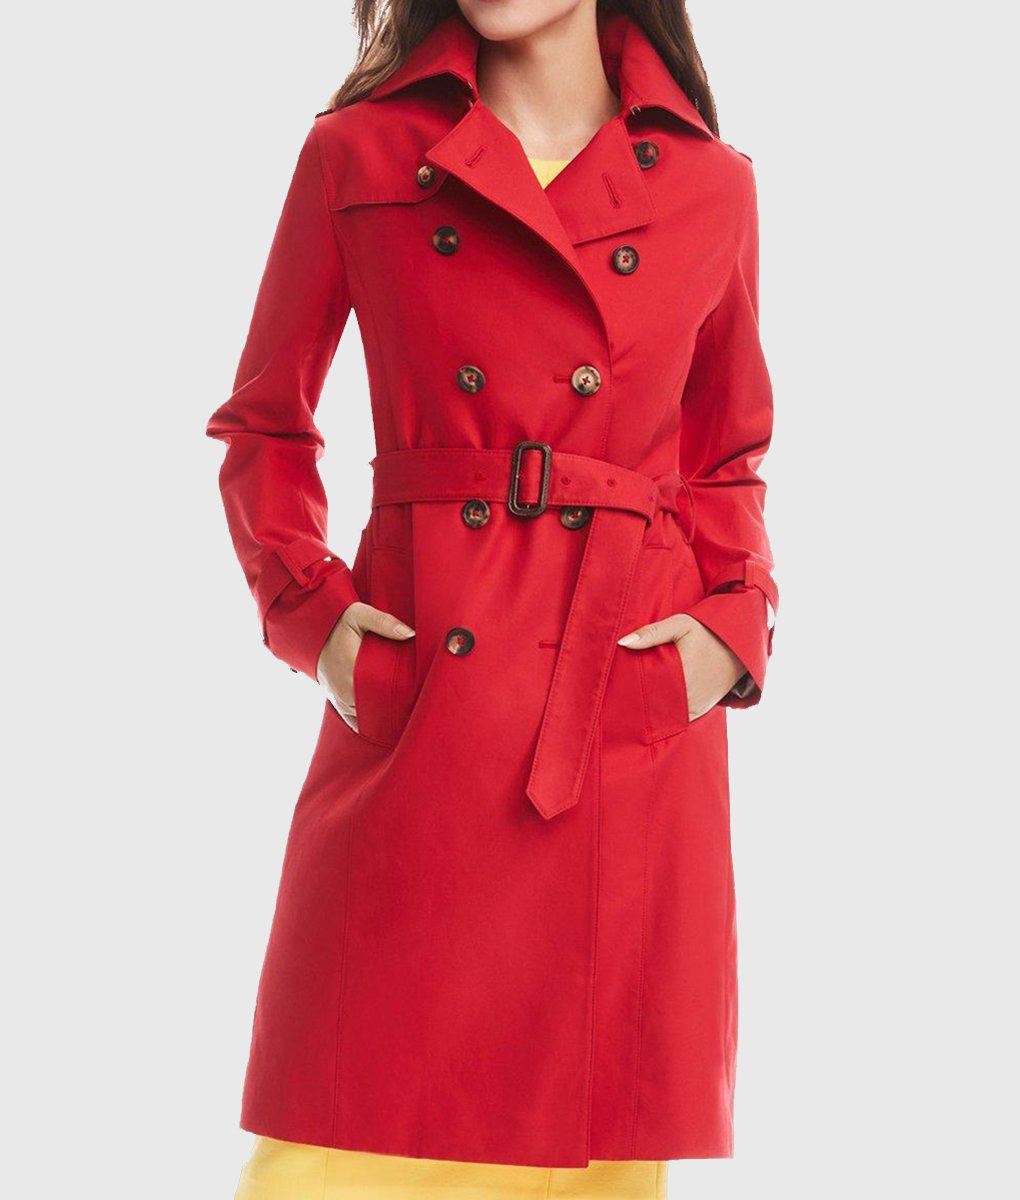 Alice Braga Dark Matter Red Trench Coat (1)